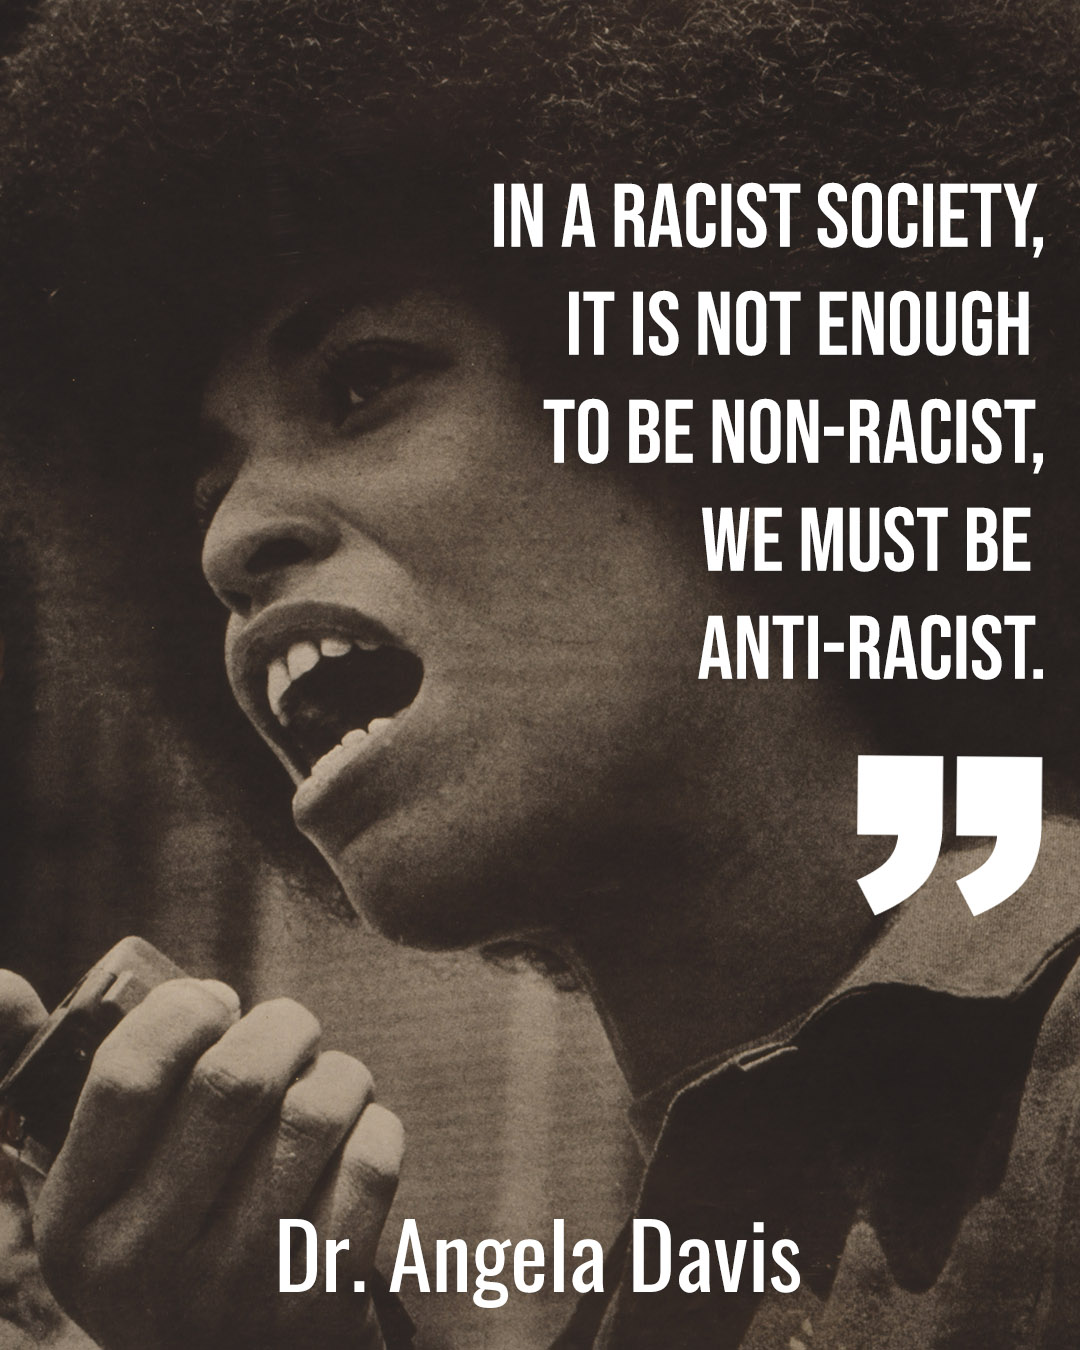 Dr Angela Davis: We must be anti-racist.